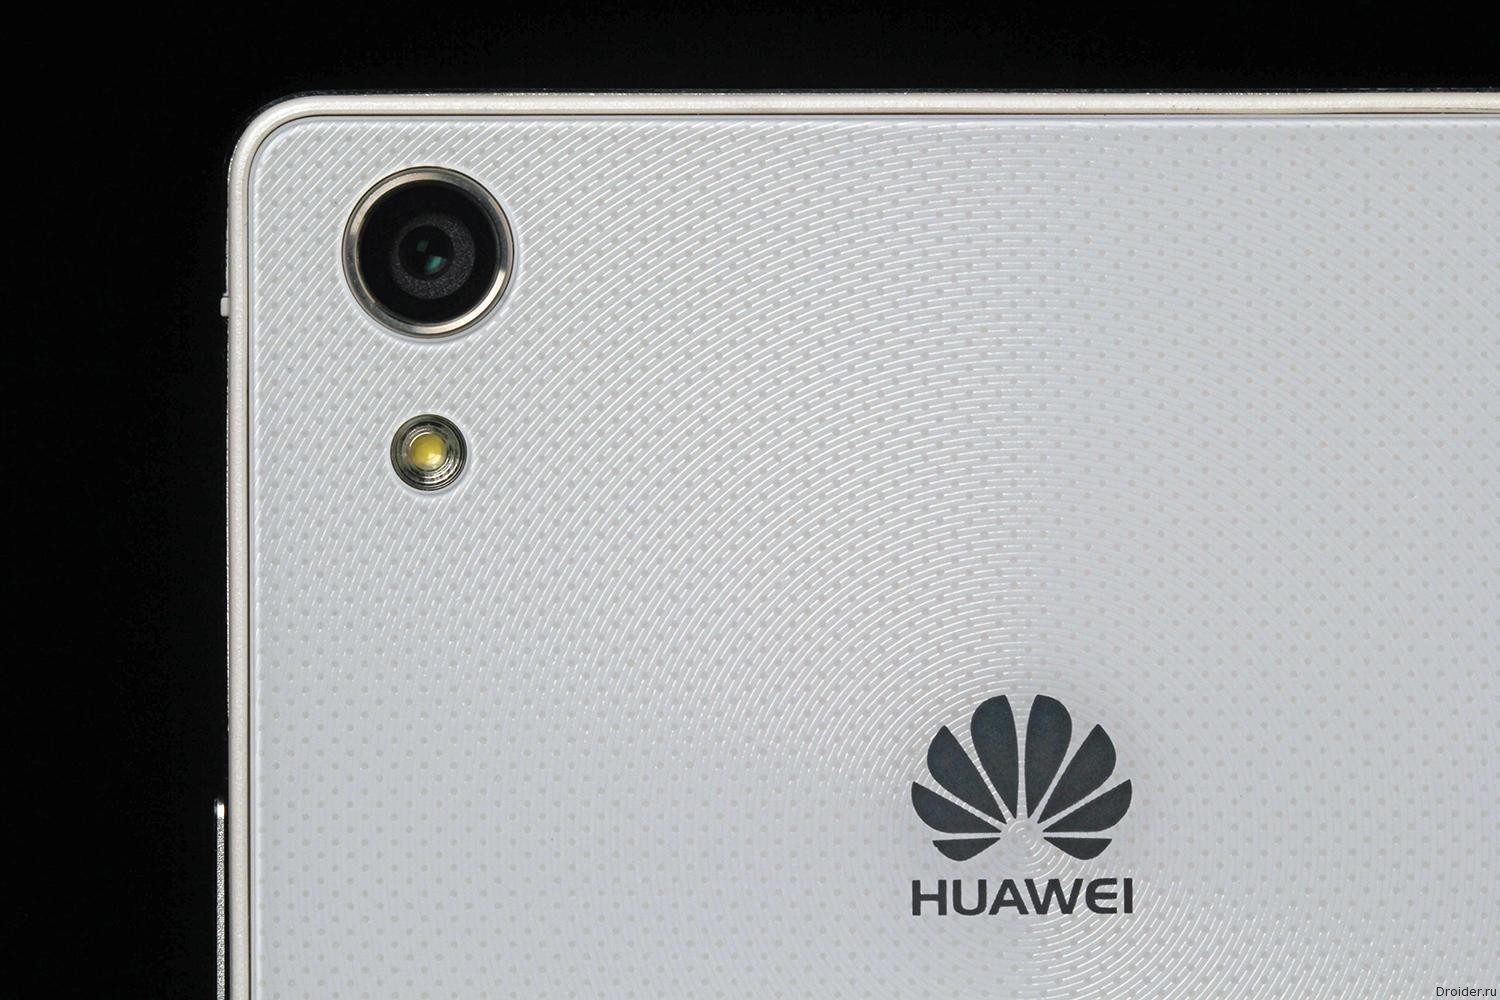 Huawei Ascend